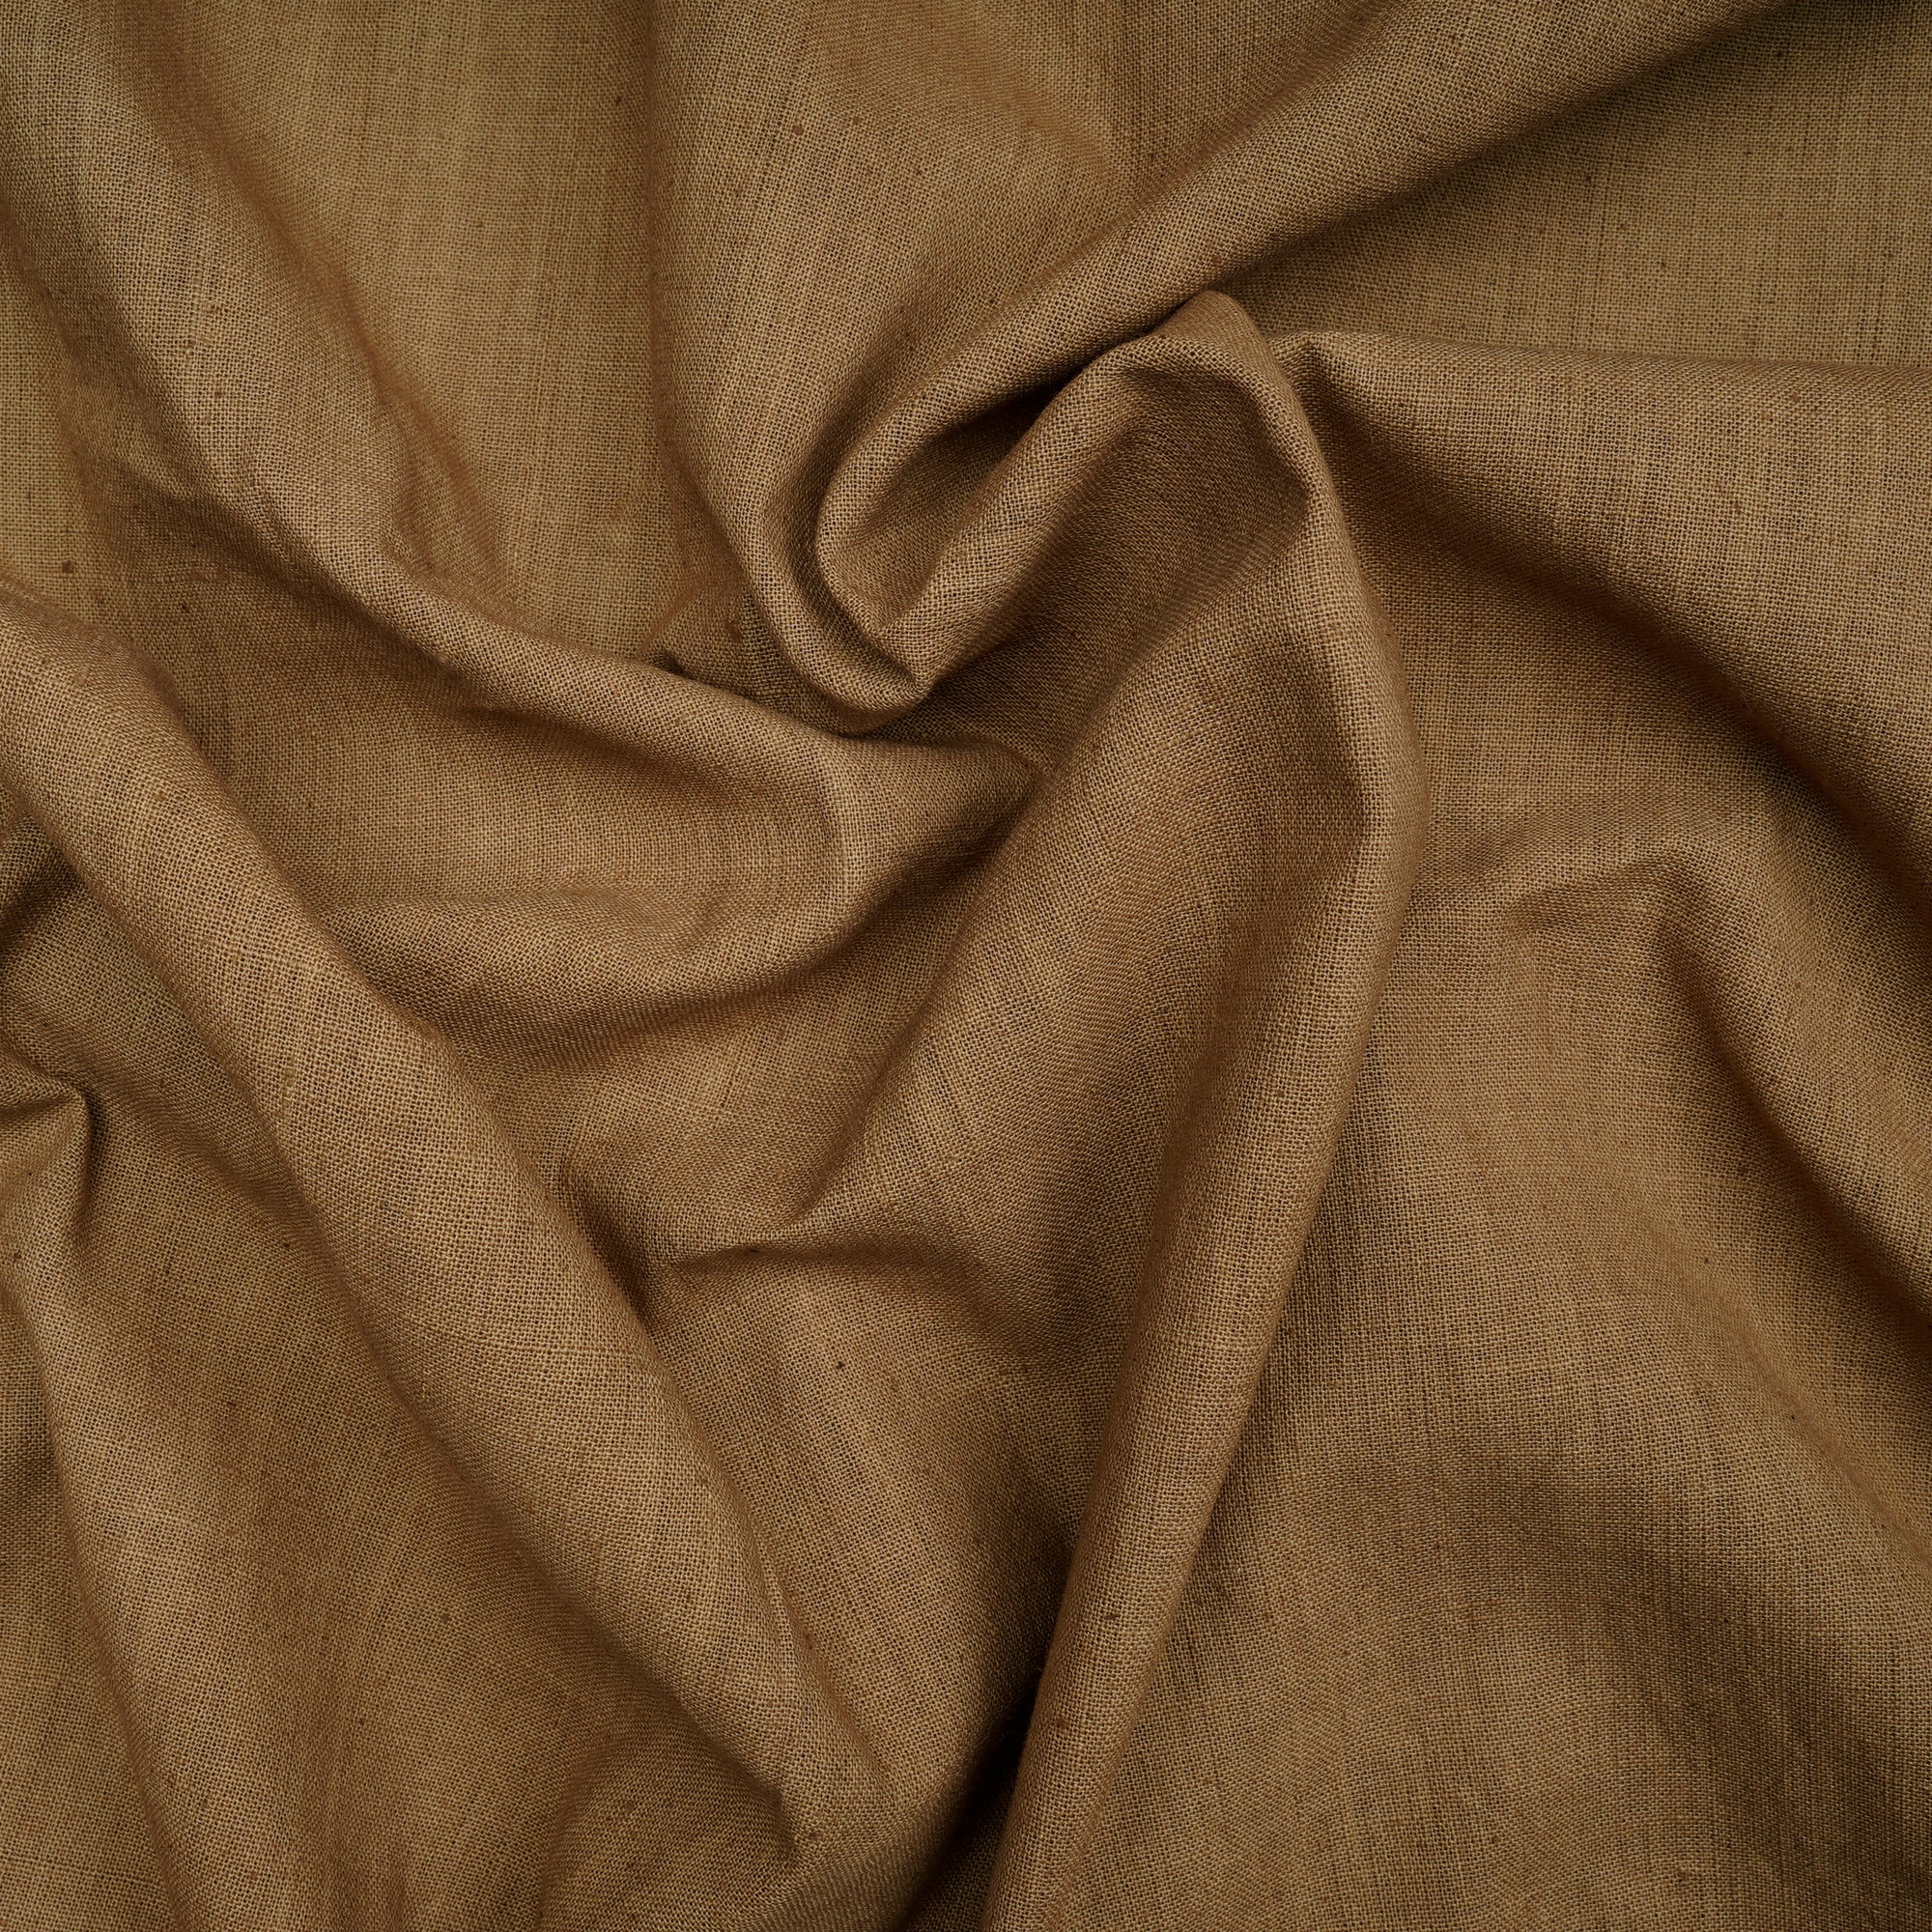 Petrified Oak 40's Count Piece Dyed Handspun Handwoven Cotton Fabric